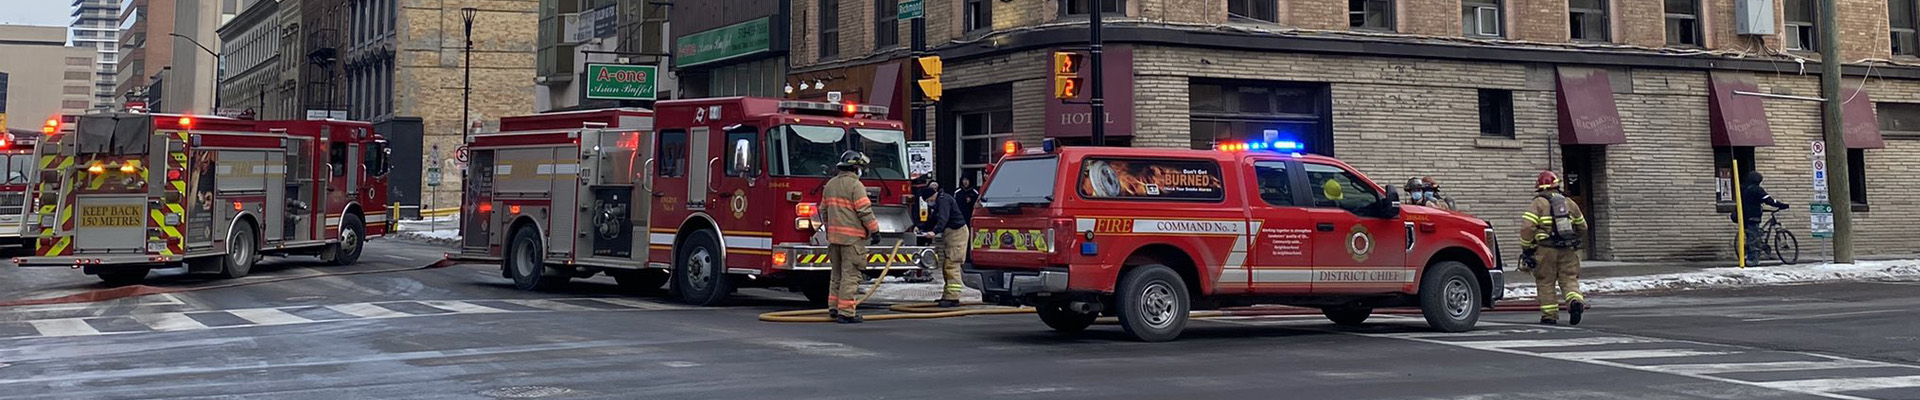 Fire trucks responding to a call 